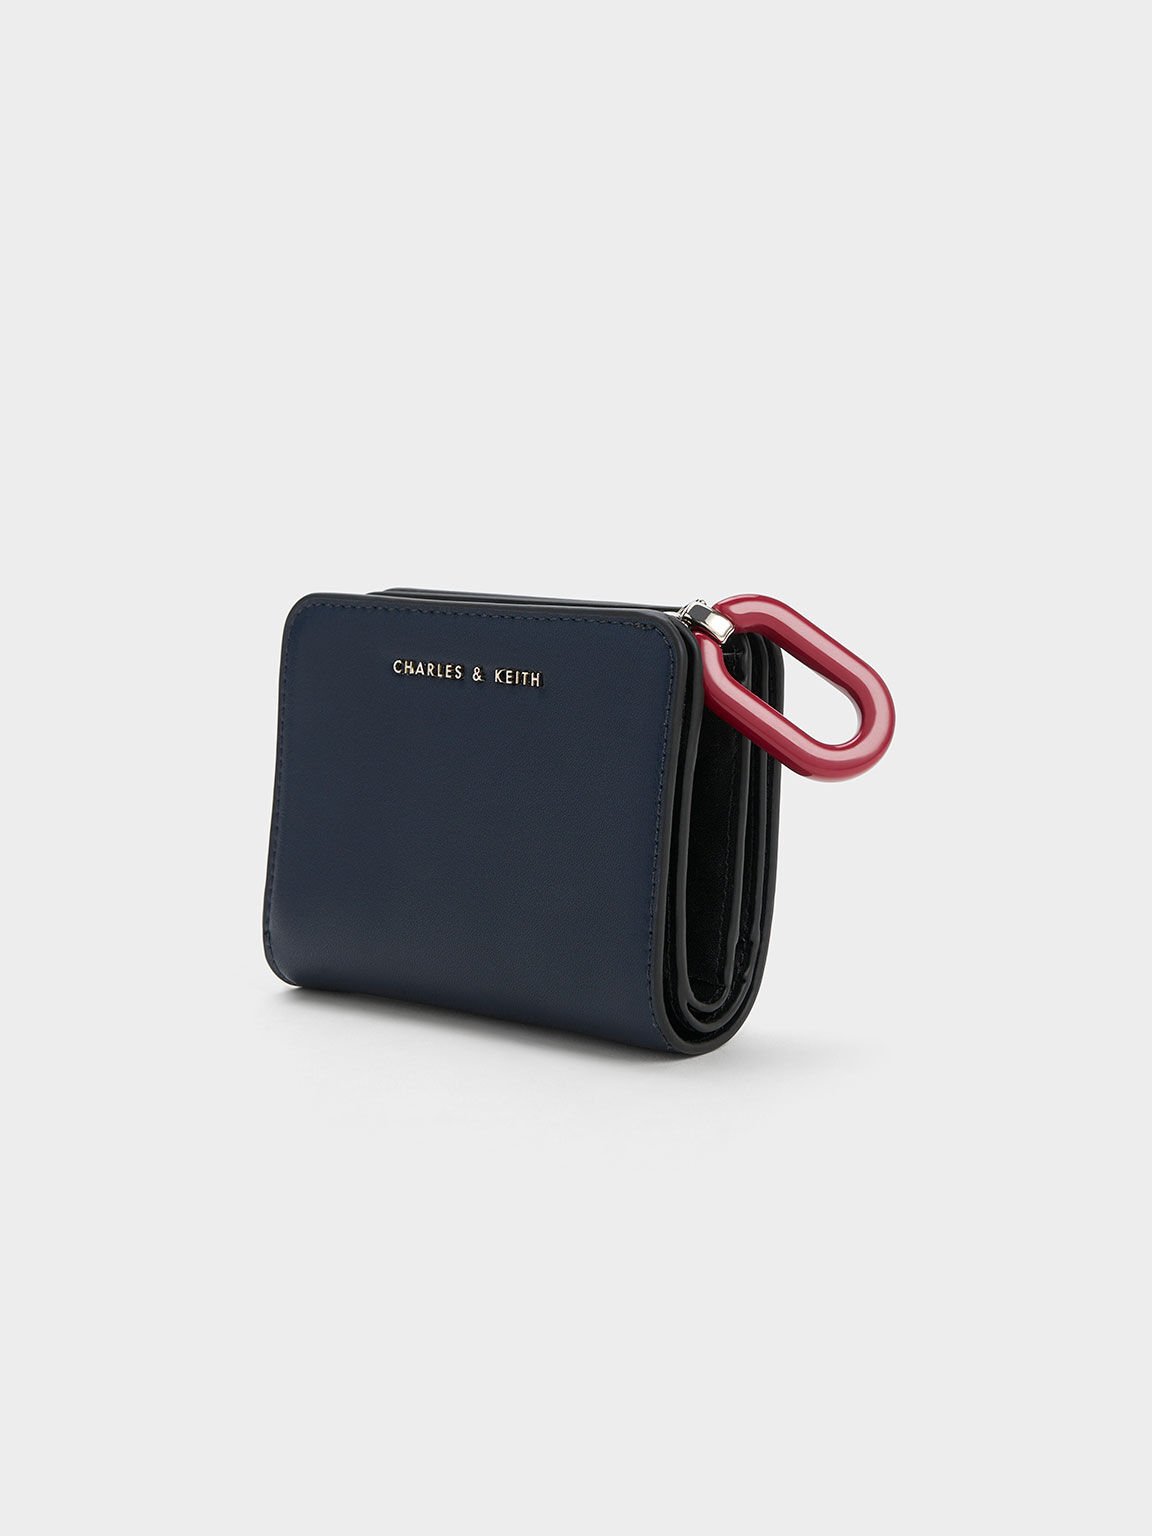 Keychain Zip Wallet — Taupe/Gold